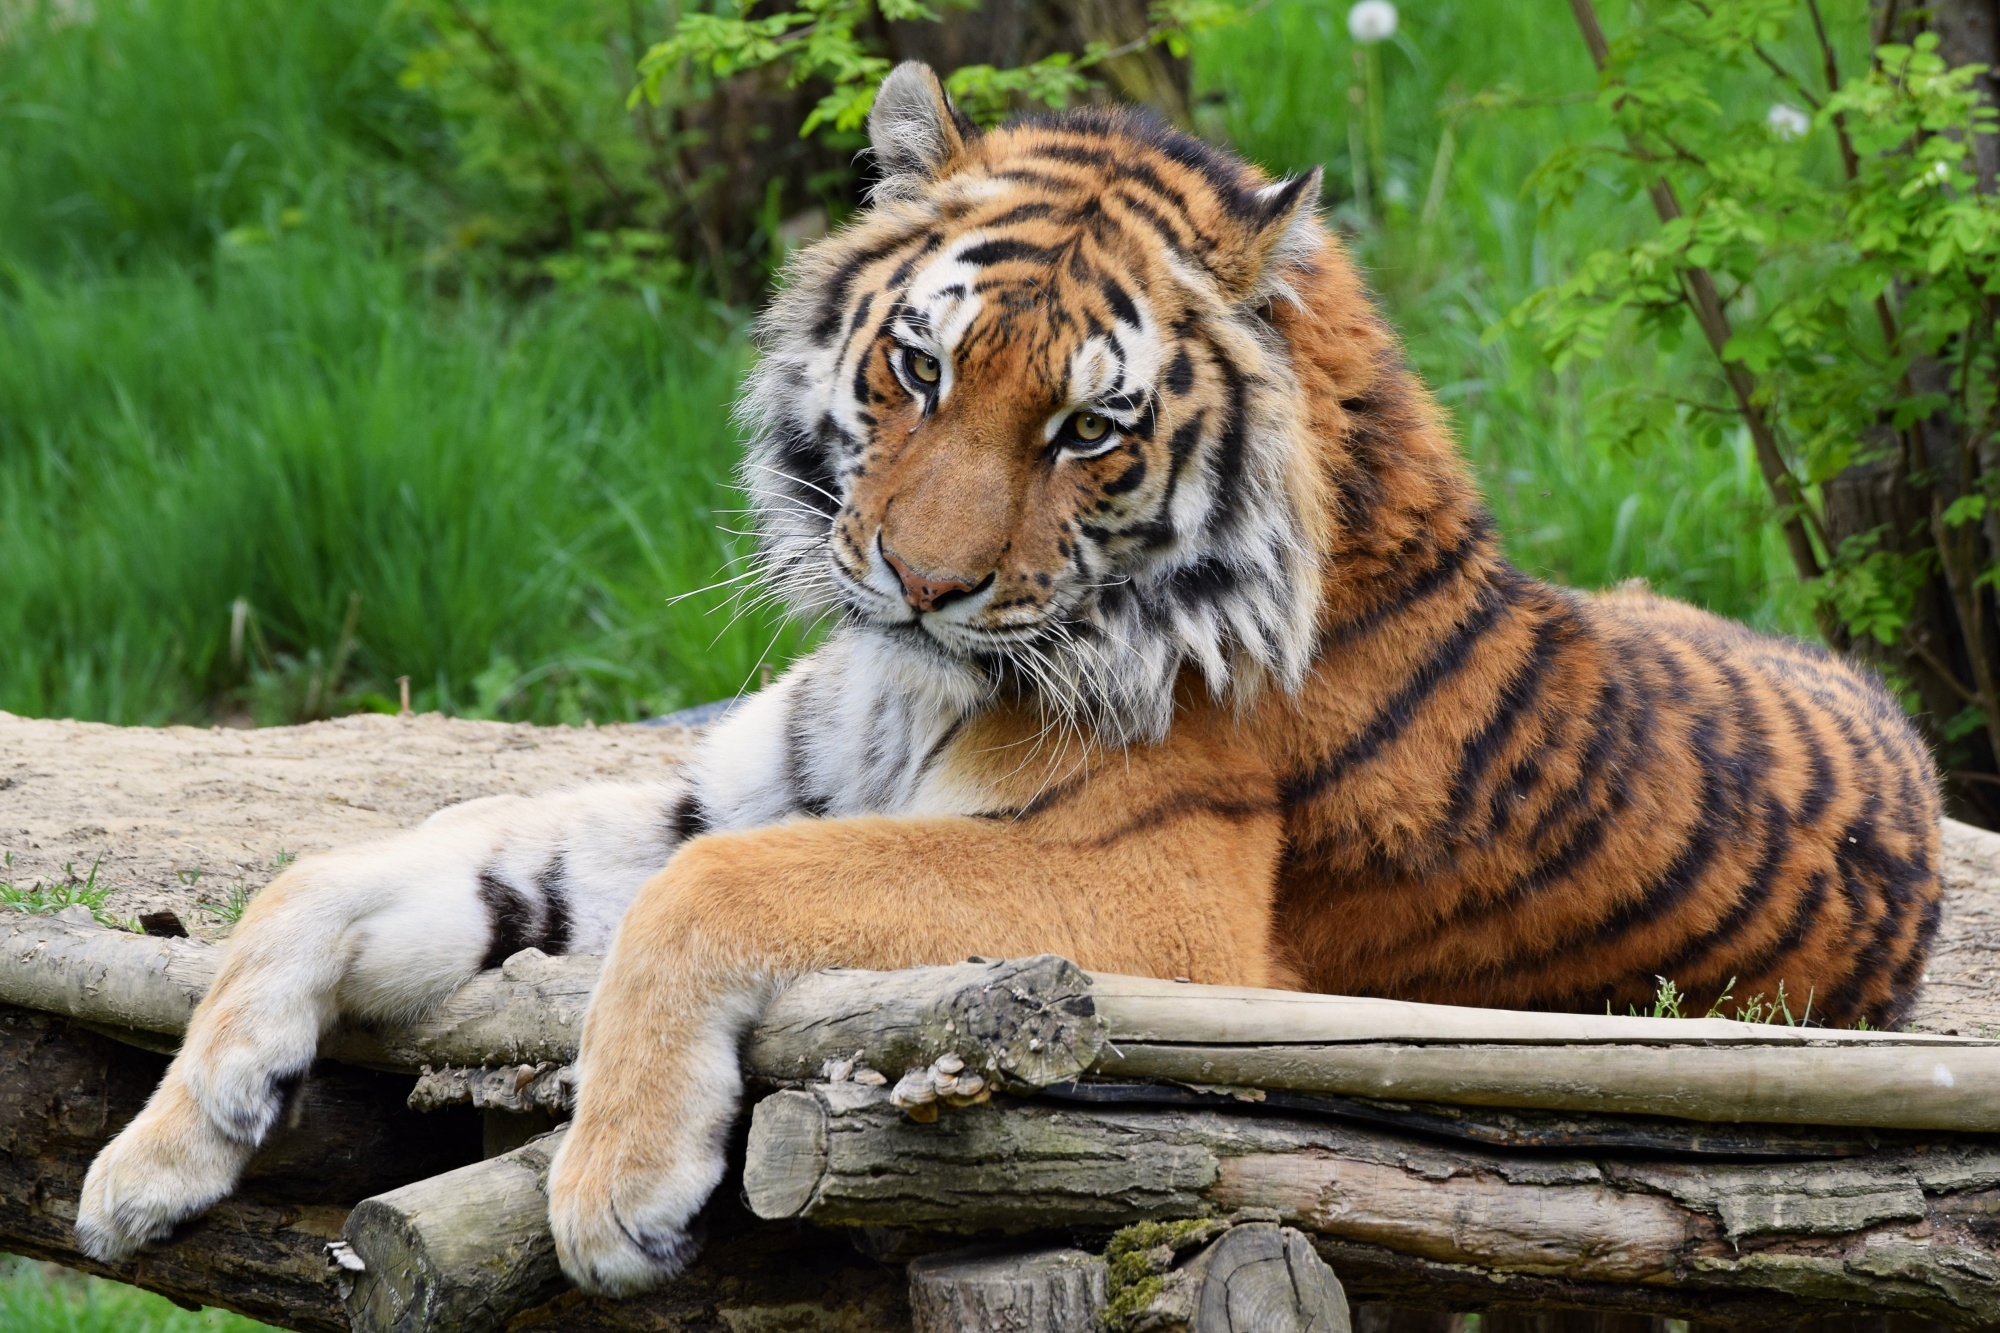 tiger lying on wooden floor